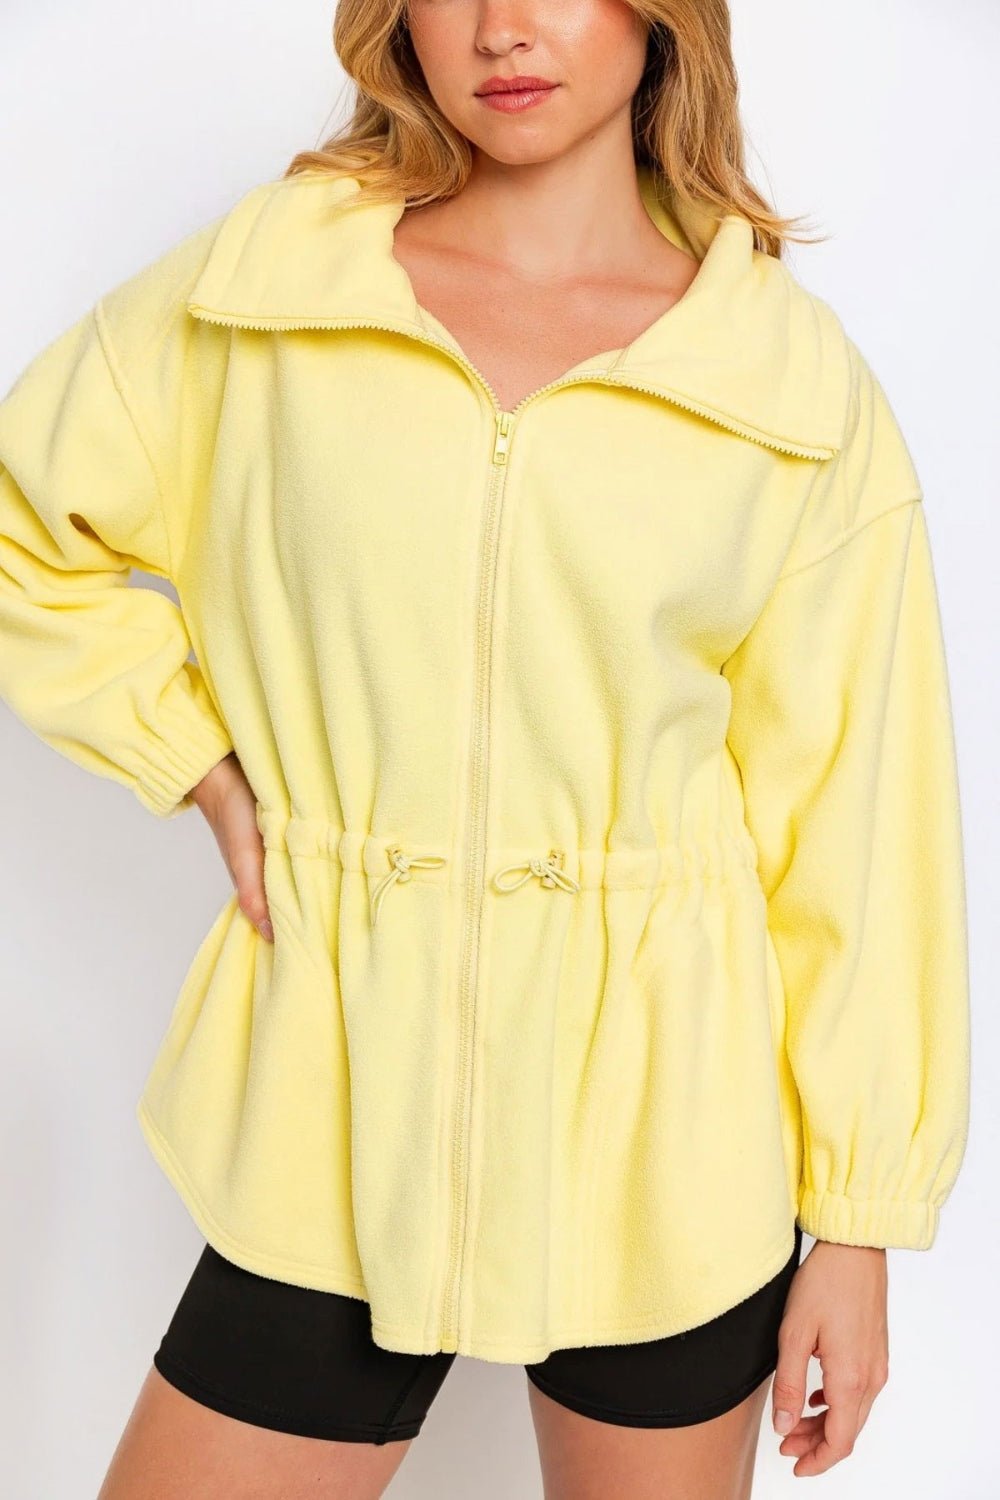 Zip Up Waist Drawstring Soft Fleece Jacket in Citron YellowJacketTASHA